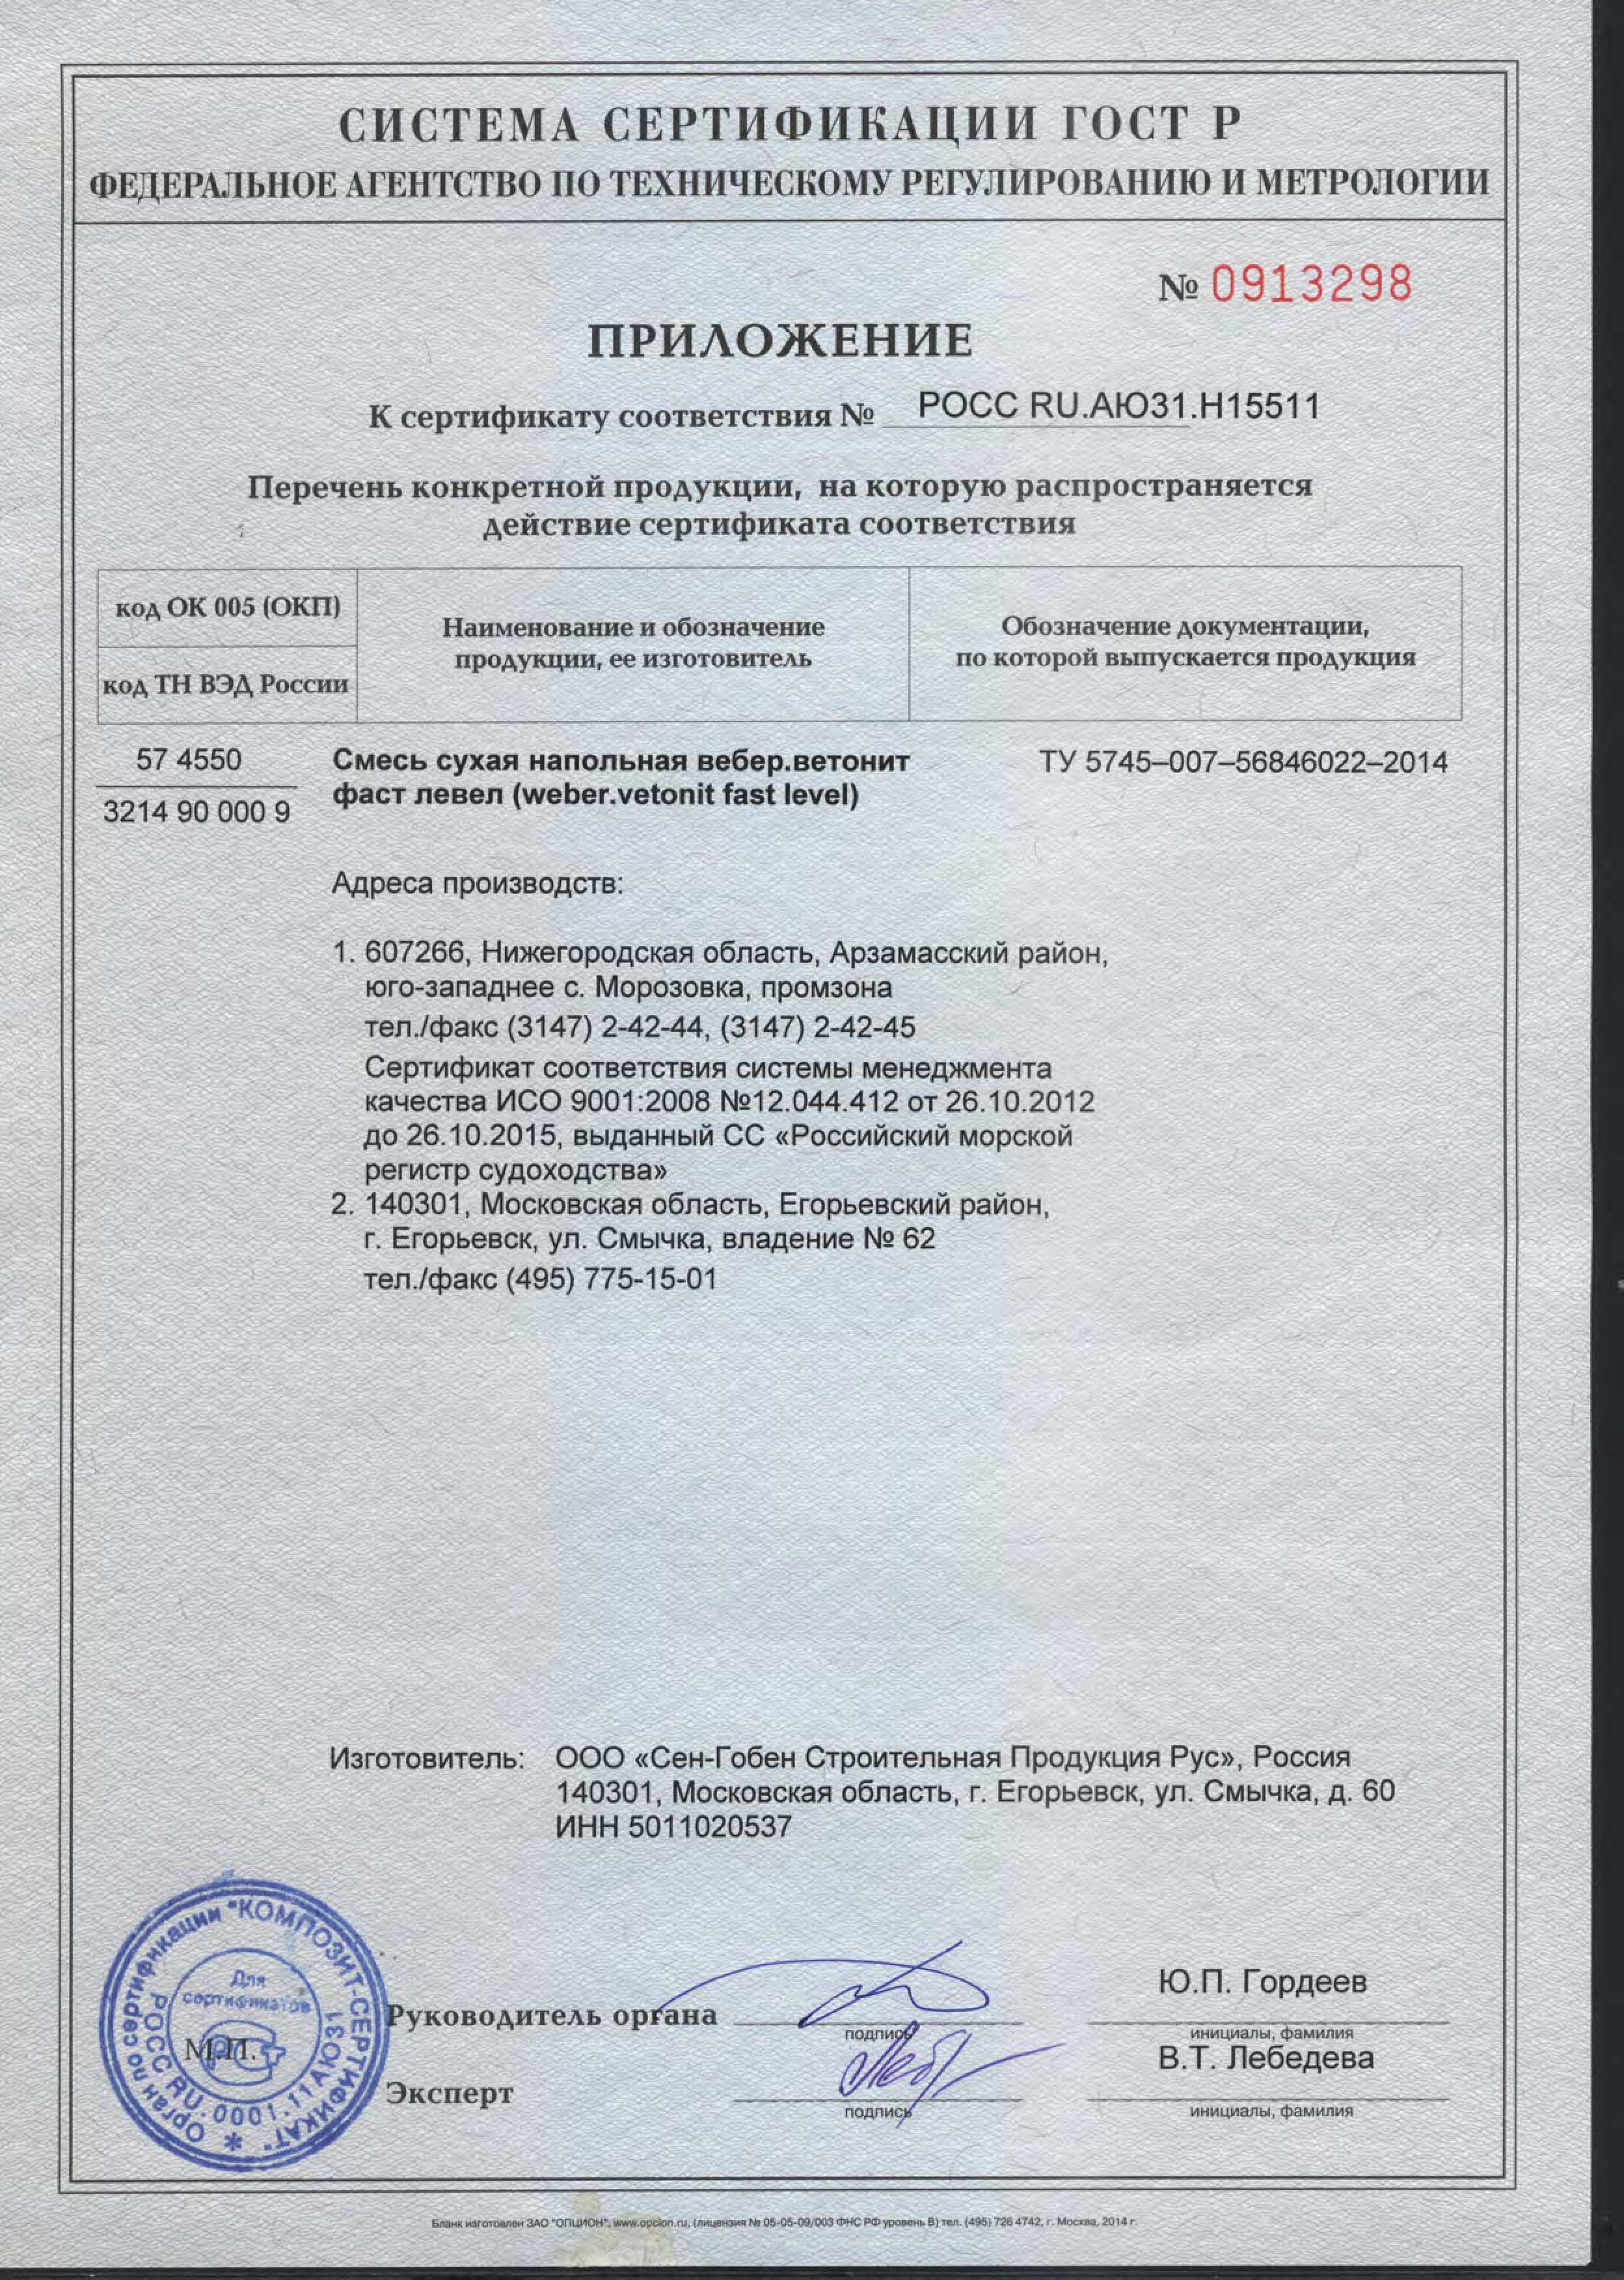 Сертификат соответствия на наливной пол ветонит Фаст Левел 2-я страница